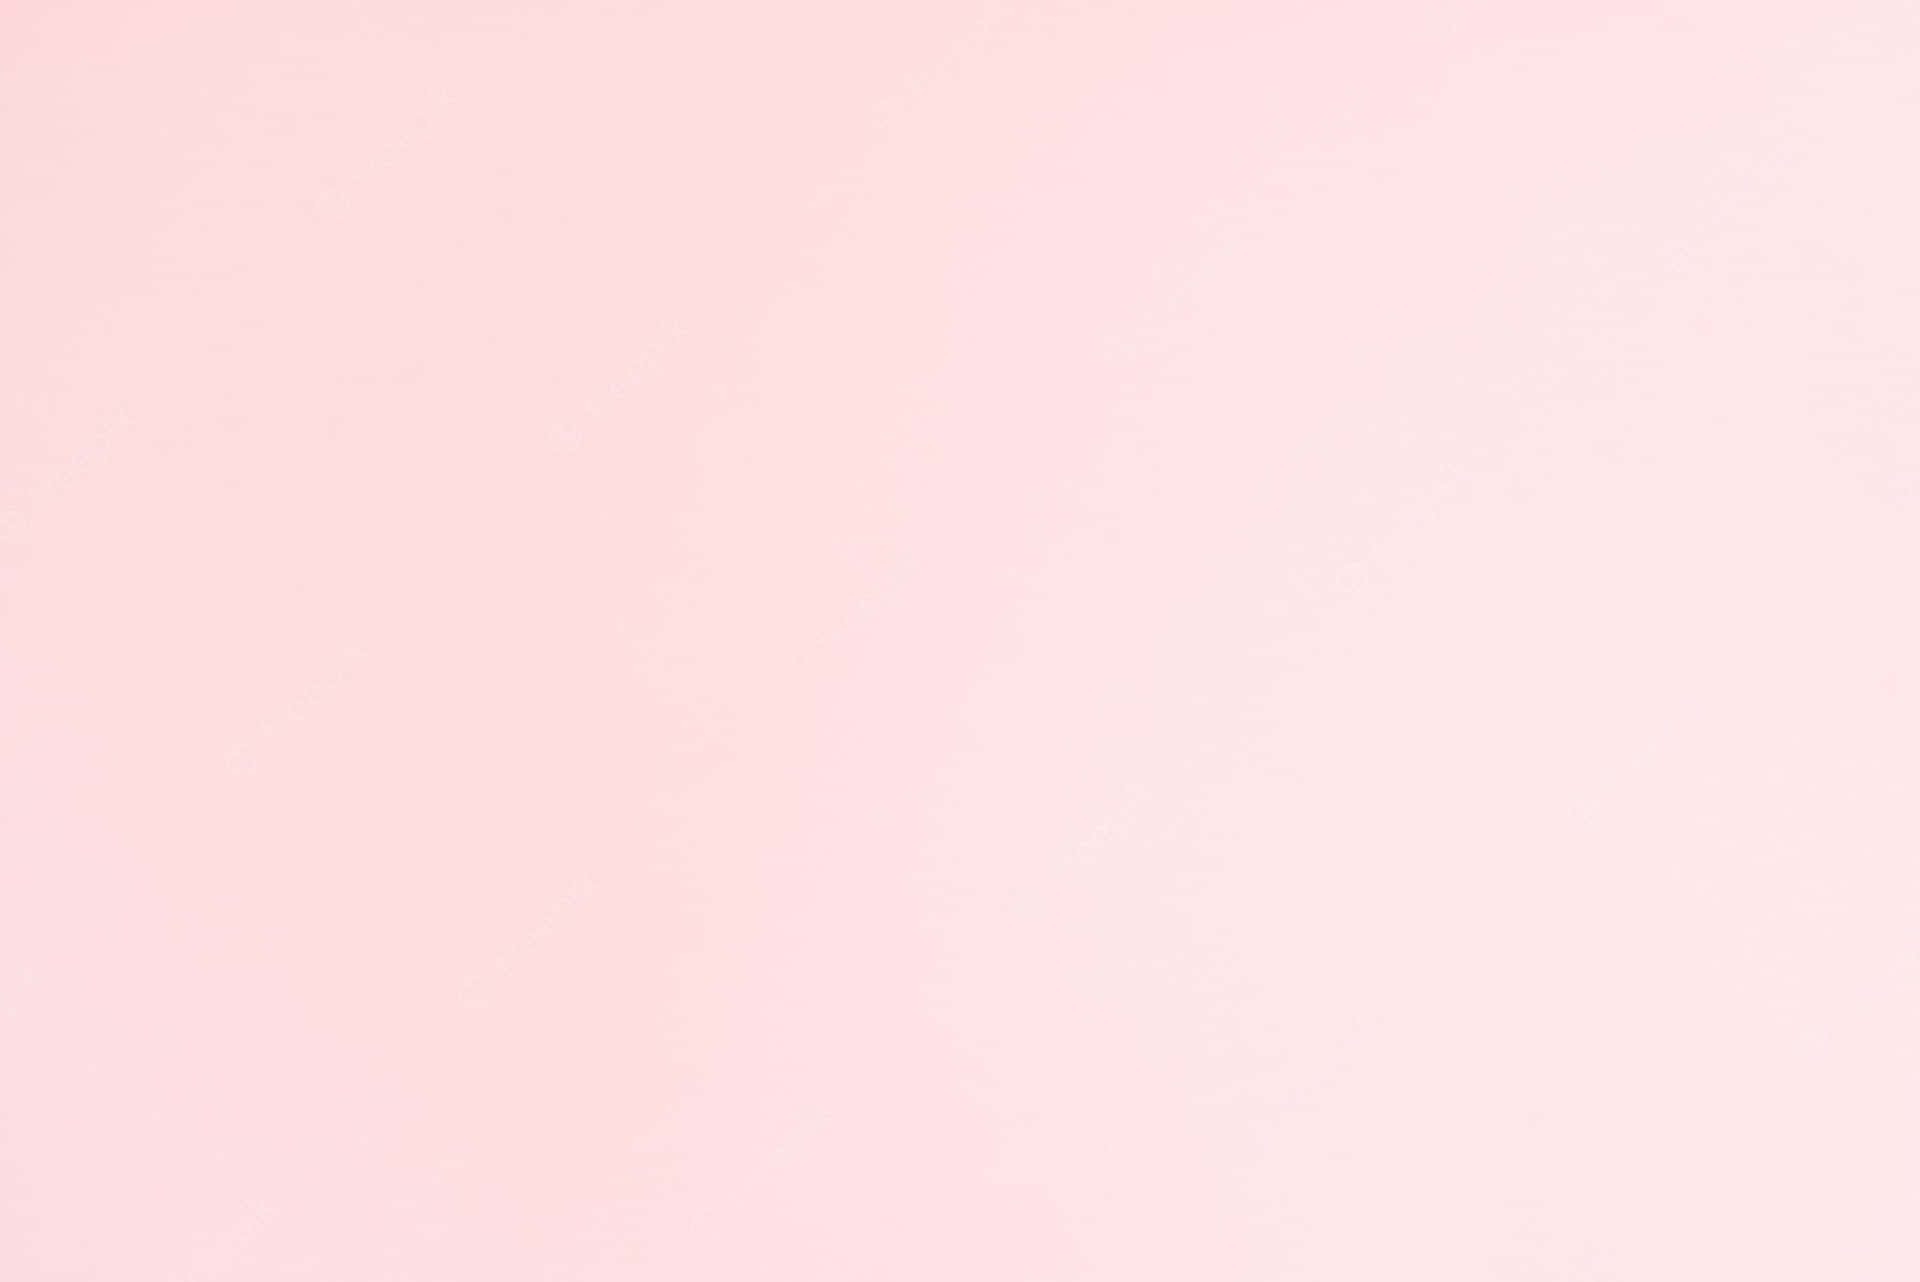 Solid color one colour single plain pink 2152x1536 wallpaper 4K HD